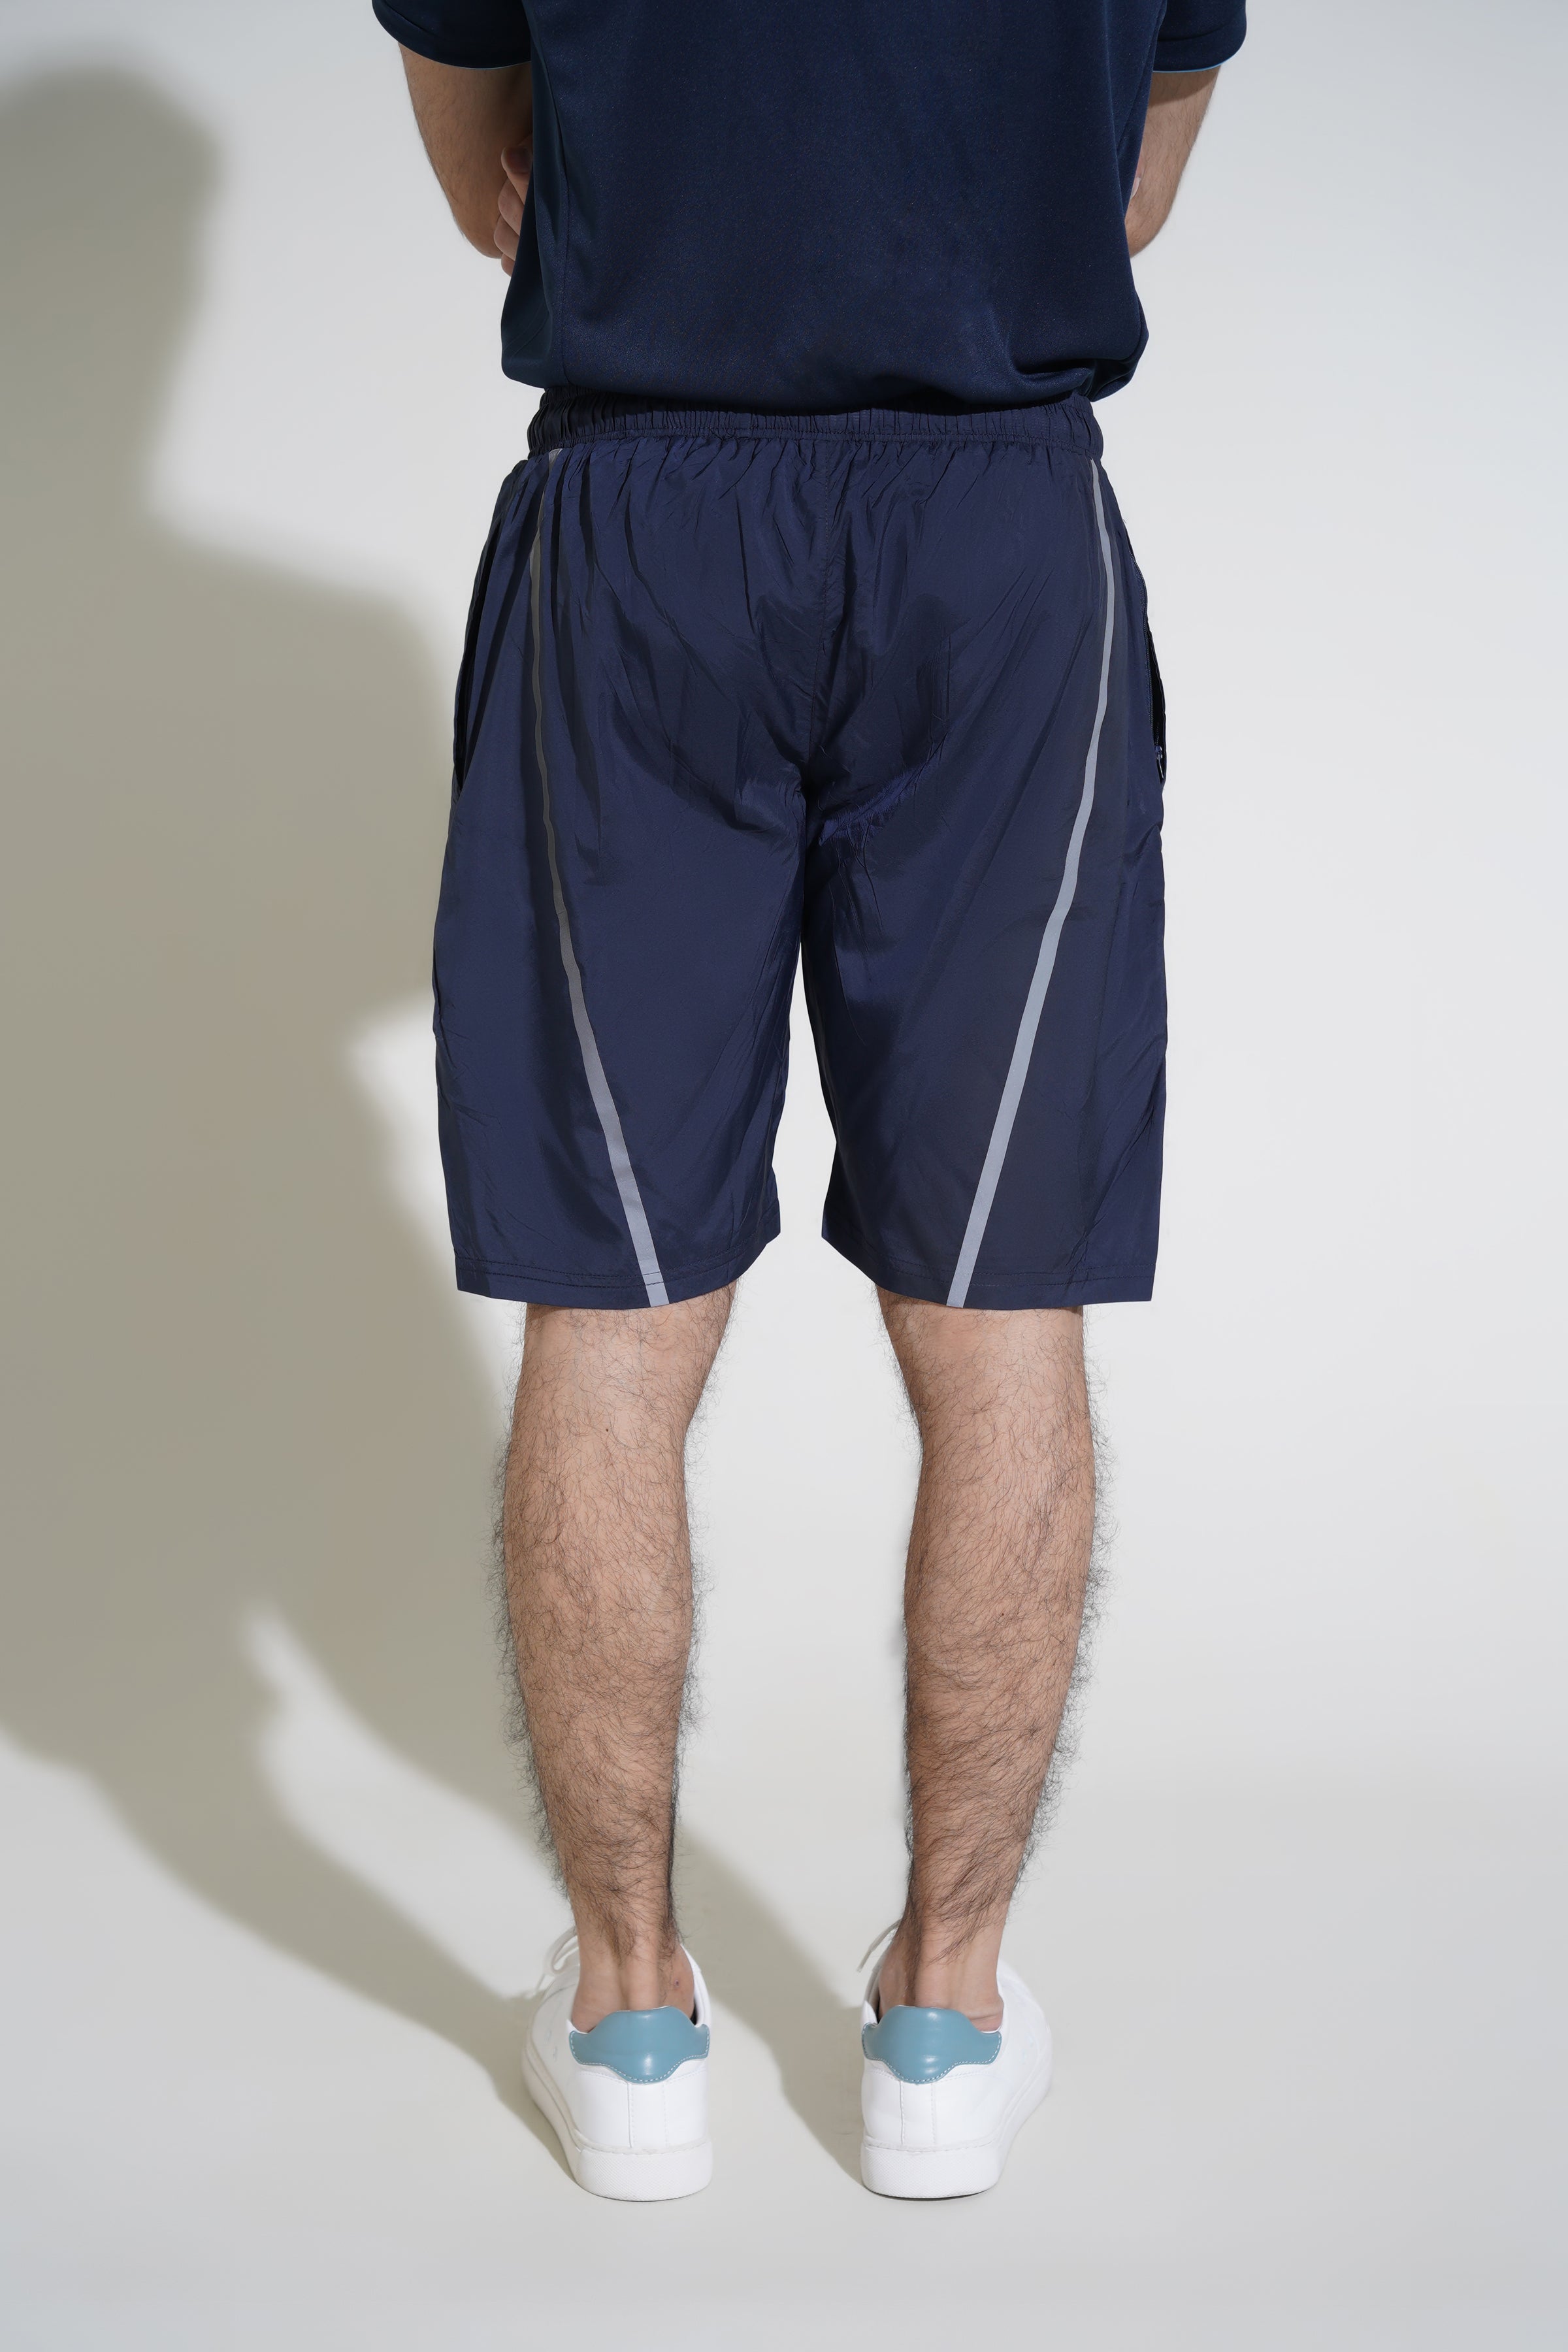 360 Navy Shorts